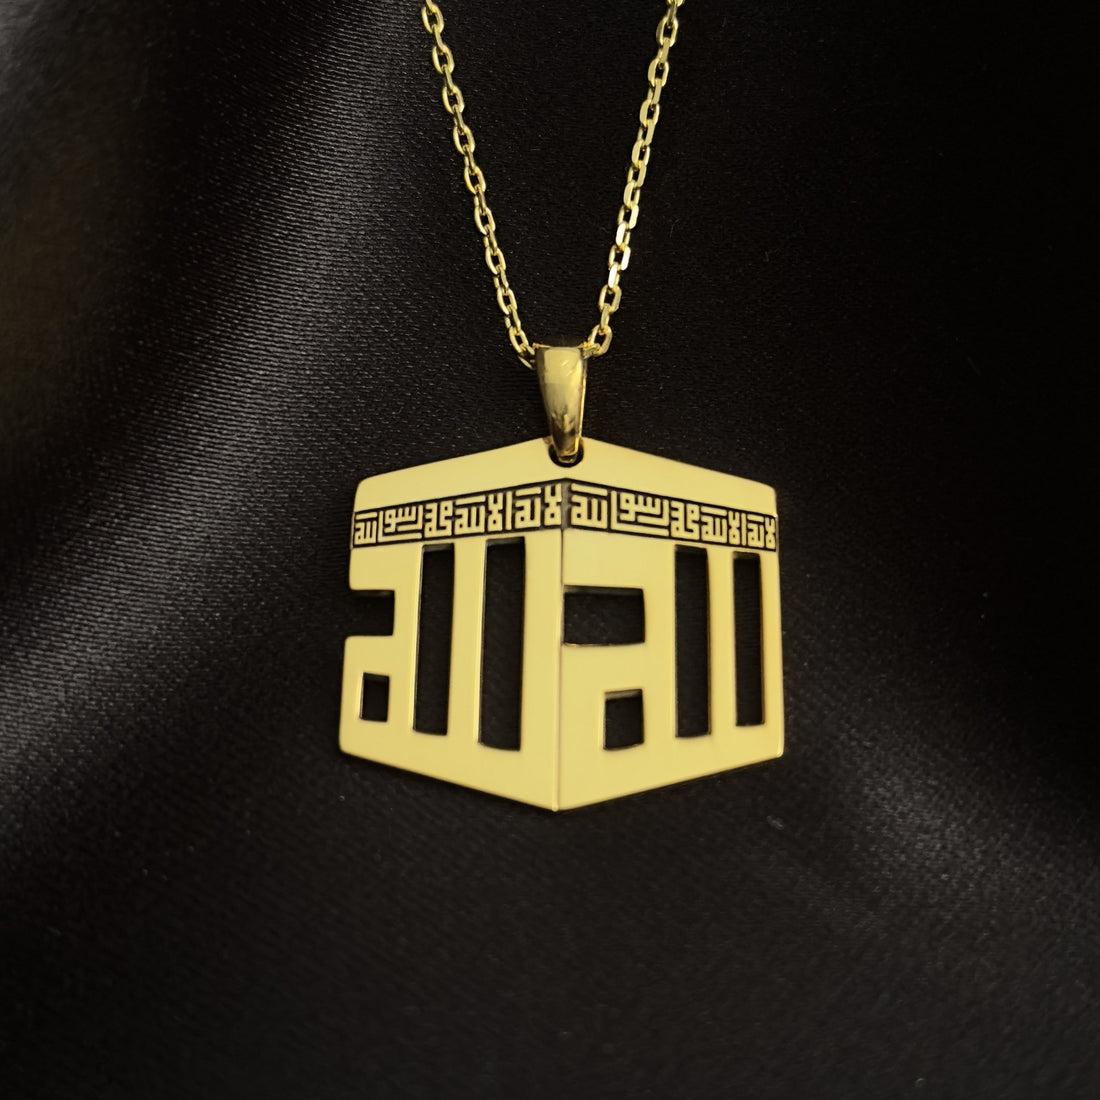 islamic-jewelry-kaaba-3d-design-islamic-necklace-18k-gold-pendant-on-925-silver-elegant-golden-spiritual-piece-shukranislamicart